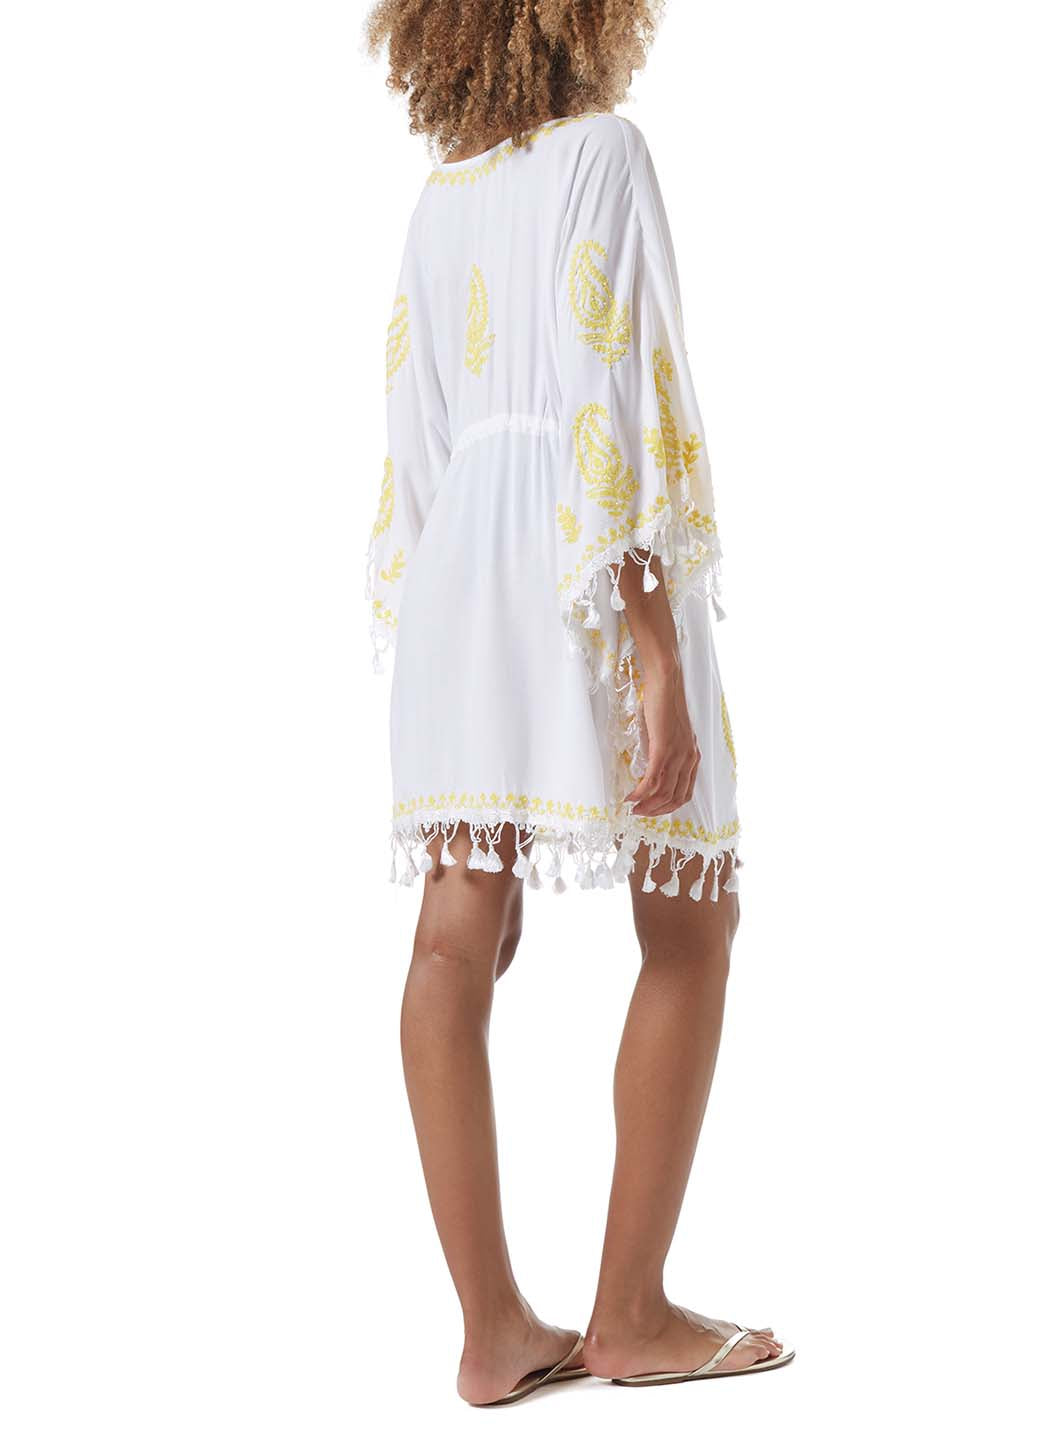 sharize-white-yellow-embroidered-kaftan-model_B